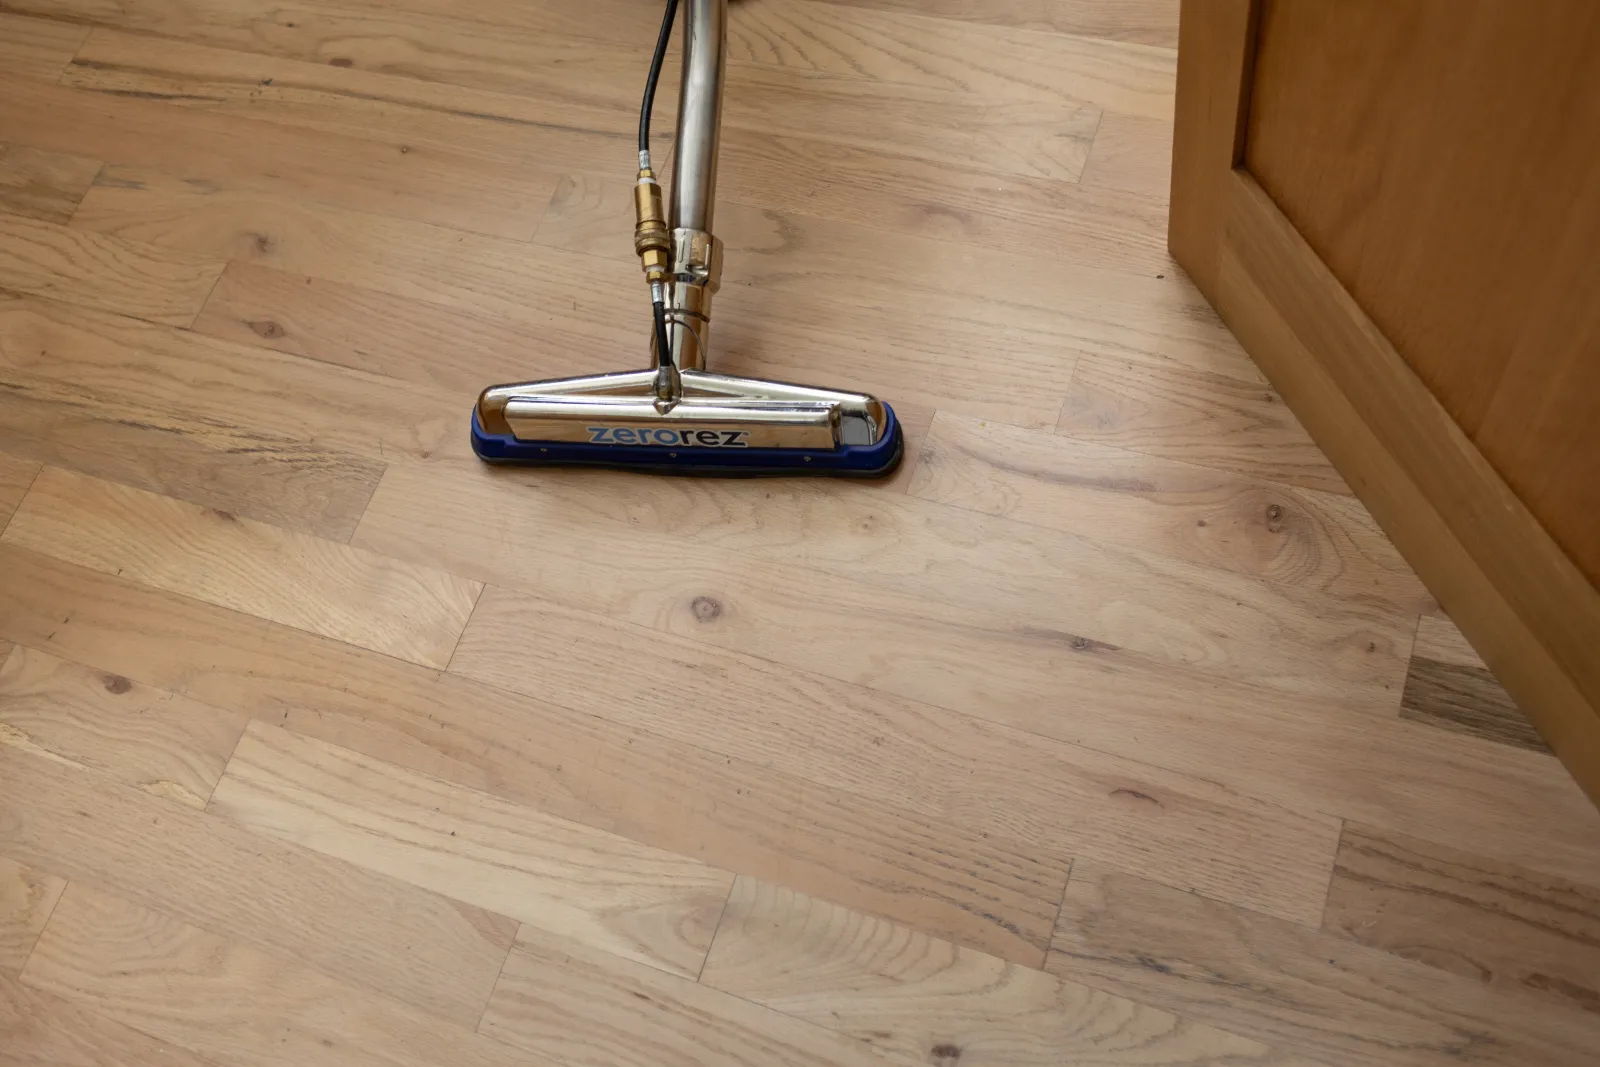 a Zerorez cleaning wand on a hardwood floor